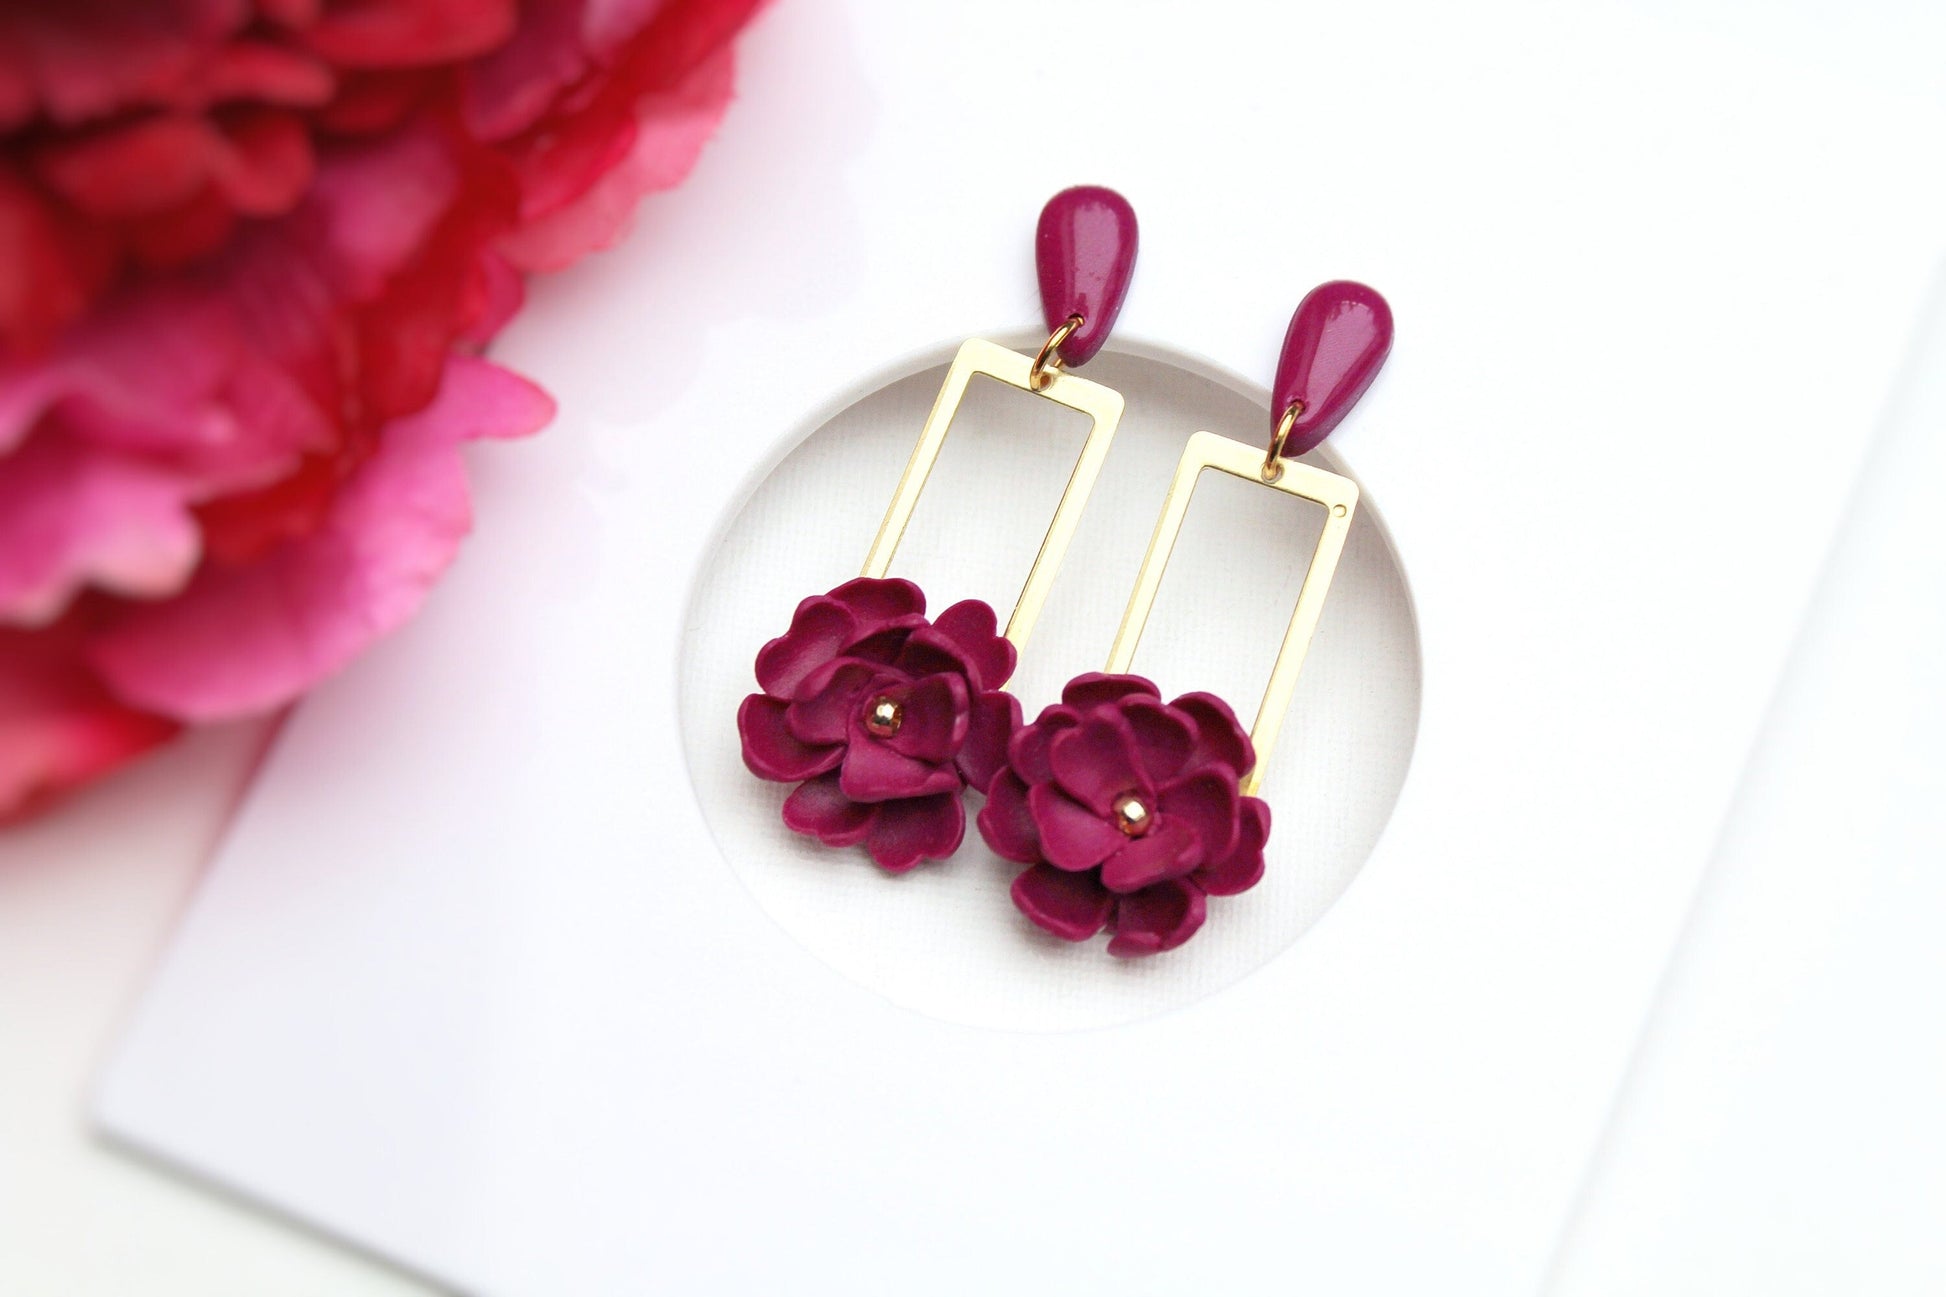 Dangle Floral Earrings, Flower Earrings, Burgundy Earrings, Polymer Clay Earrings, Spring Earrings, Earrings, Handmade Earrings, Statement